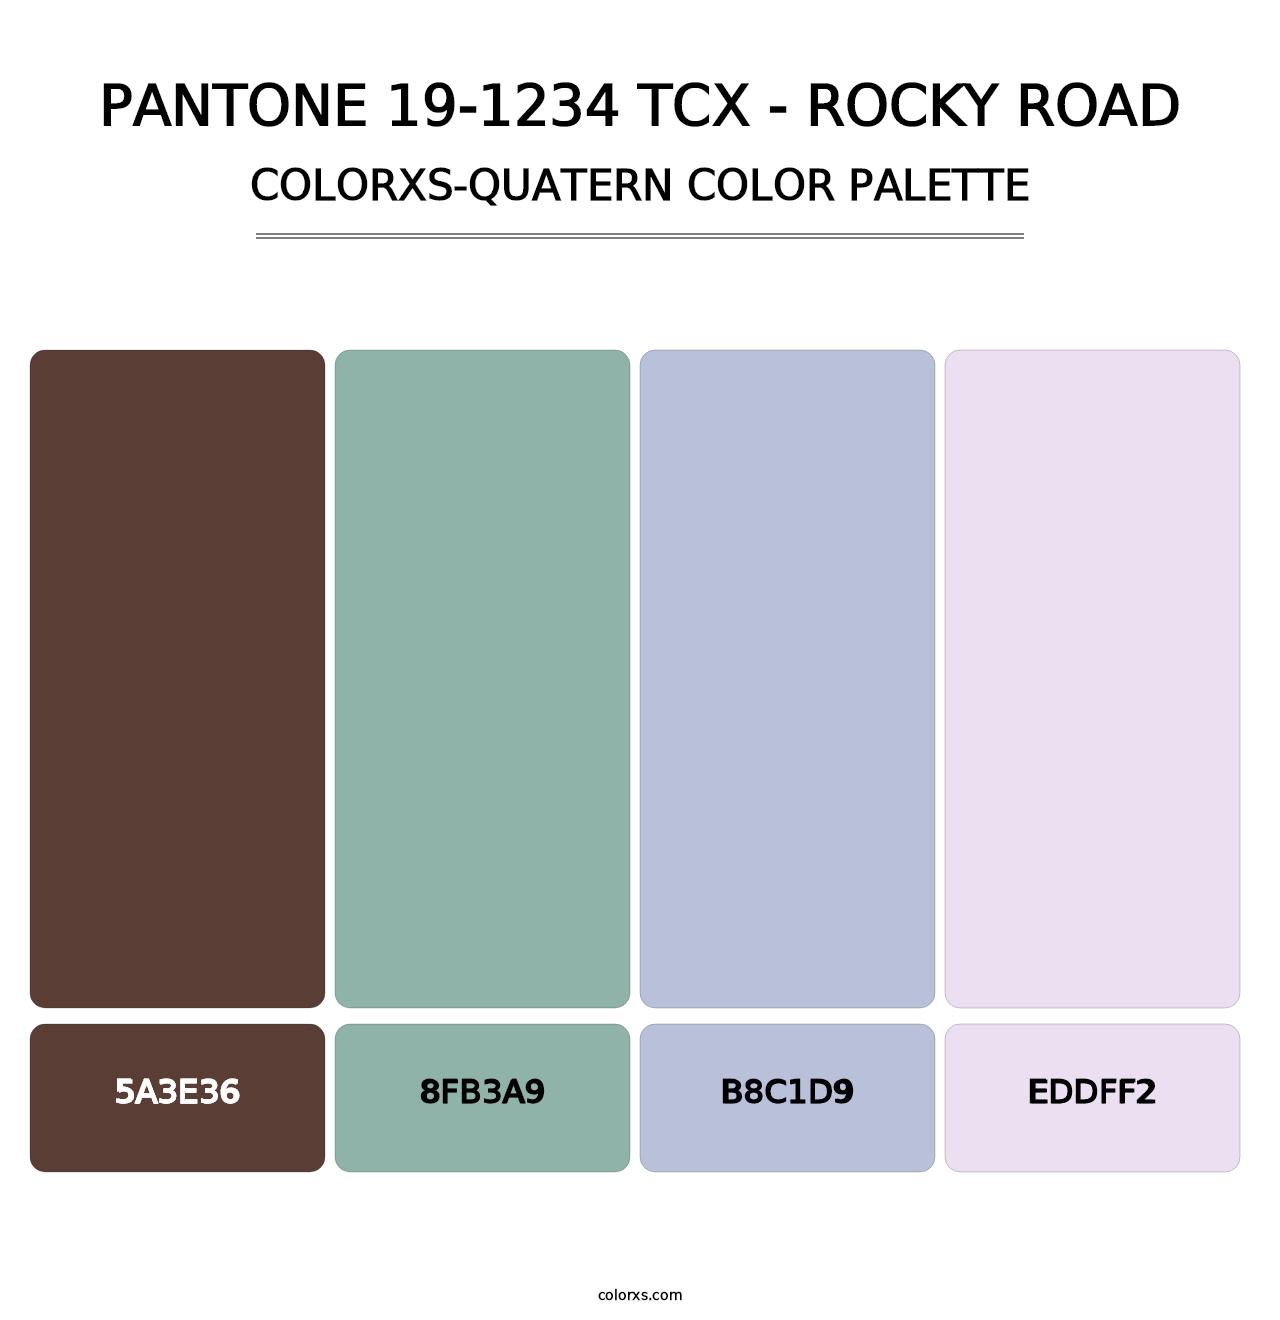 PANTONE 19-1234 TCX - Rocky Road - Colorxs Quatern Palette